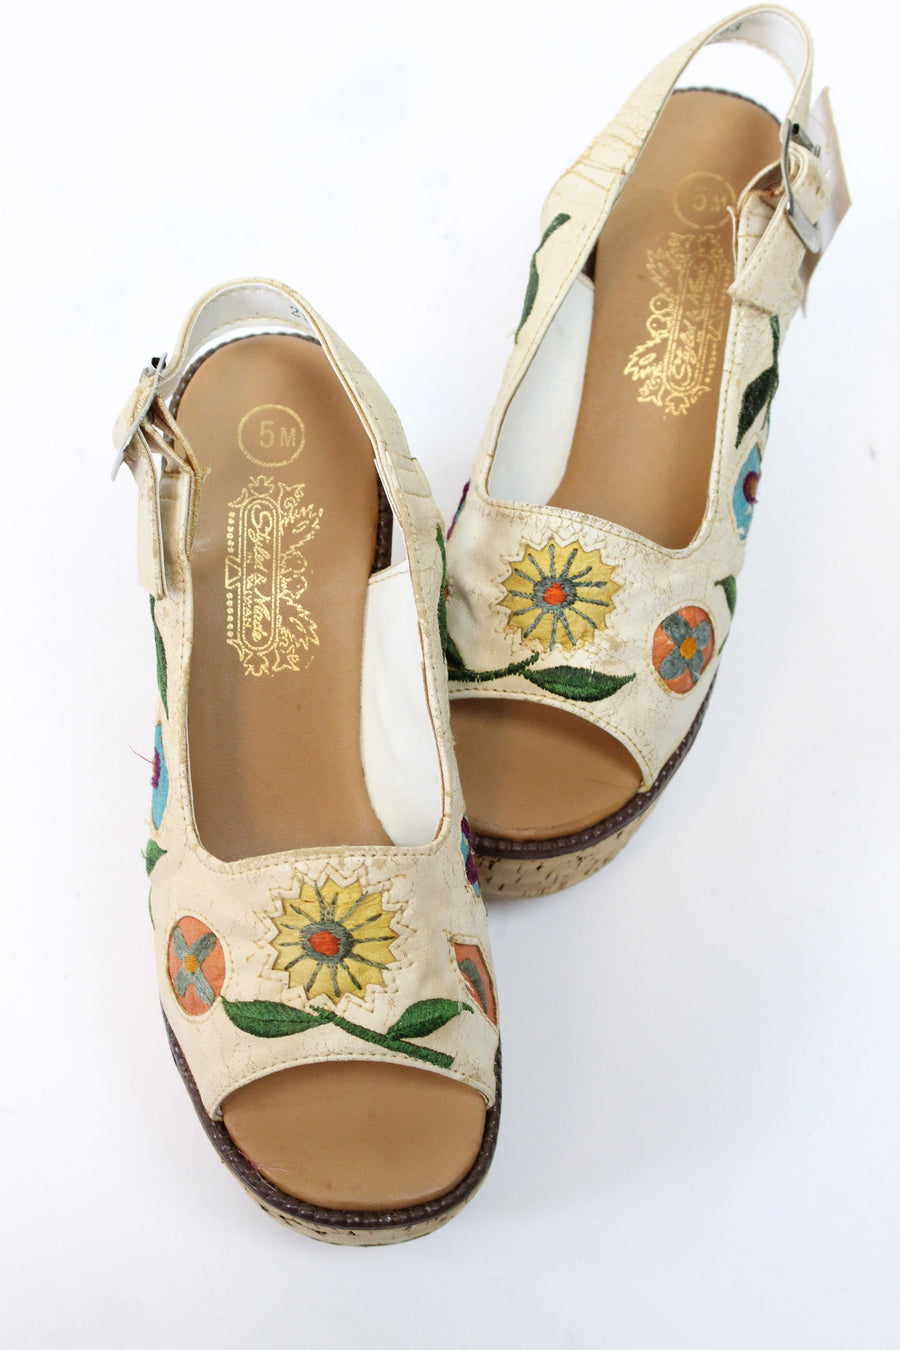 1970s cork platform shoes | deadstock leather floral sandals | size 5 us